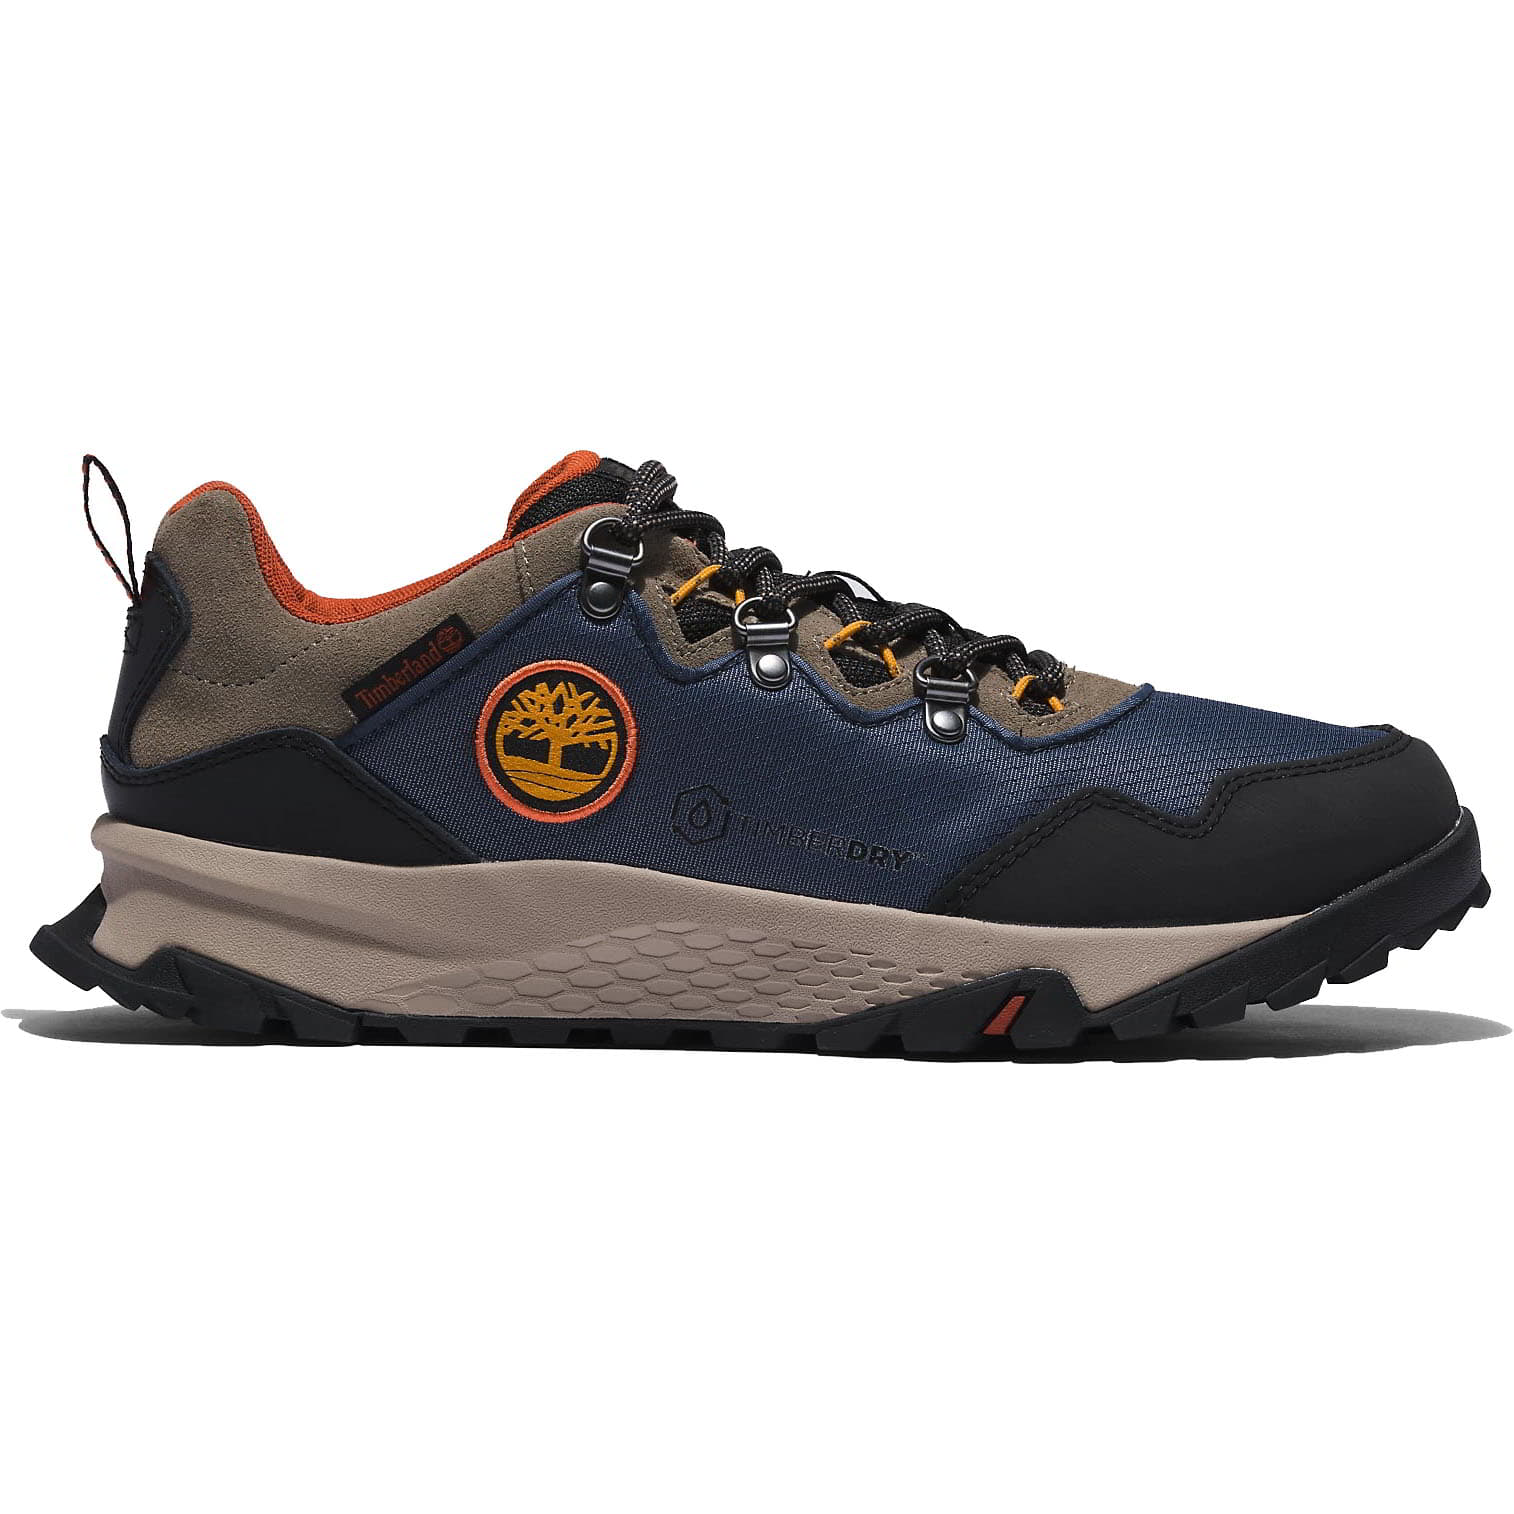 Timberland Mens A2DZZ Lincoln Peak Low Waterproof Walking Hiking Shoes - UK 8 Blue 2951